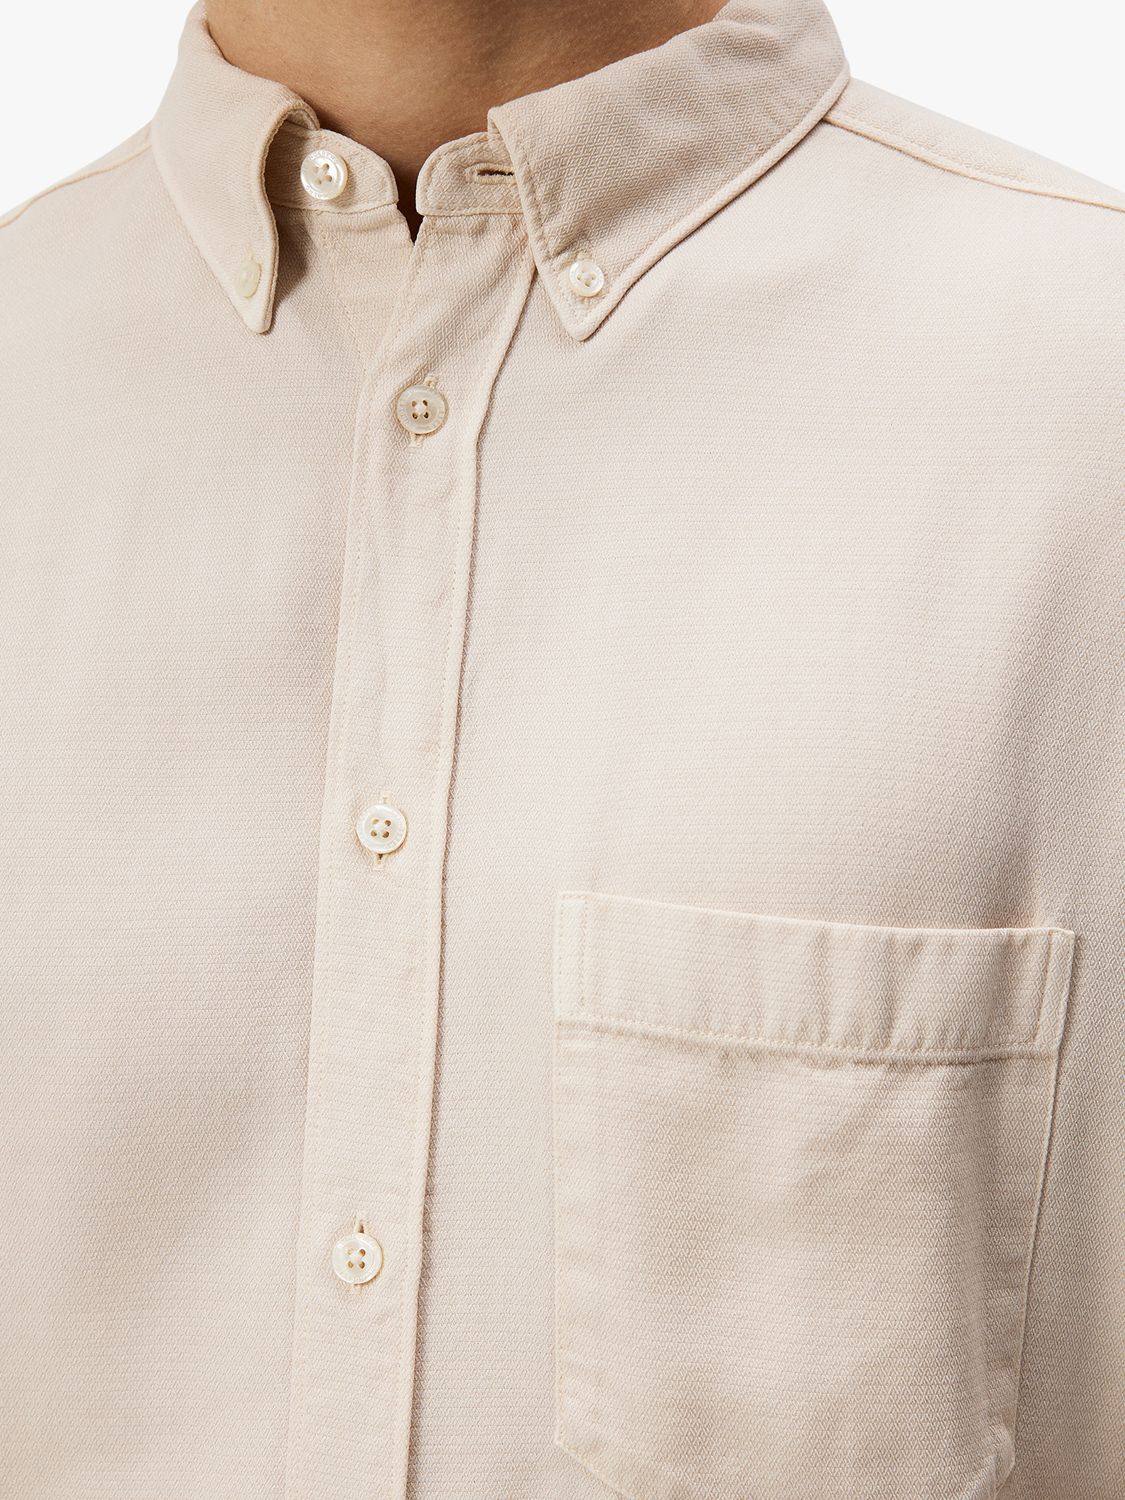 J.Lindeberg Regular Structure Tencel Shirt, Light Brown, XL